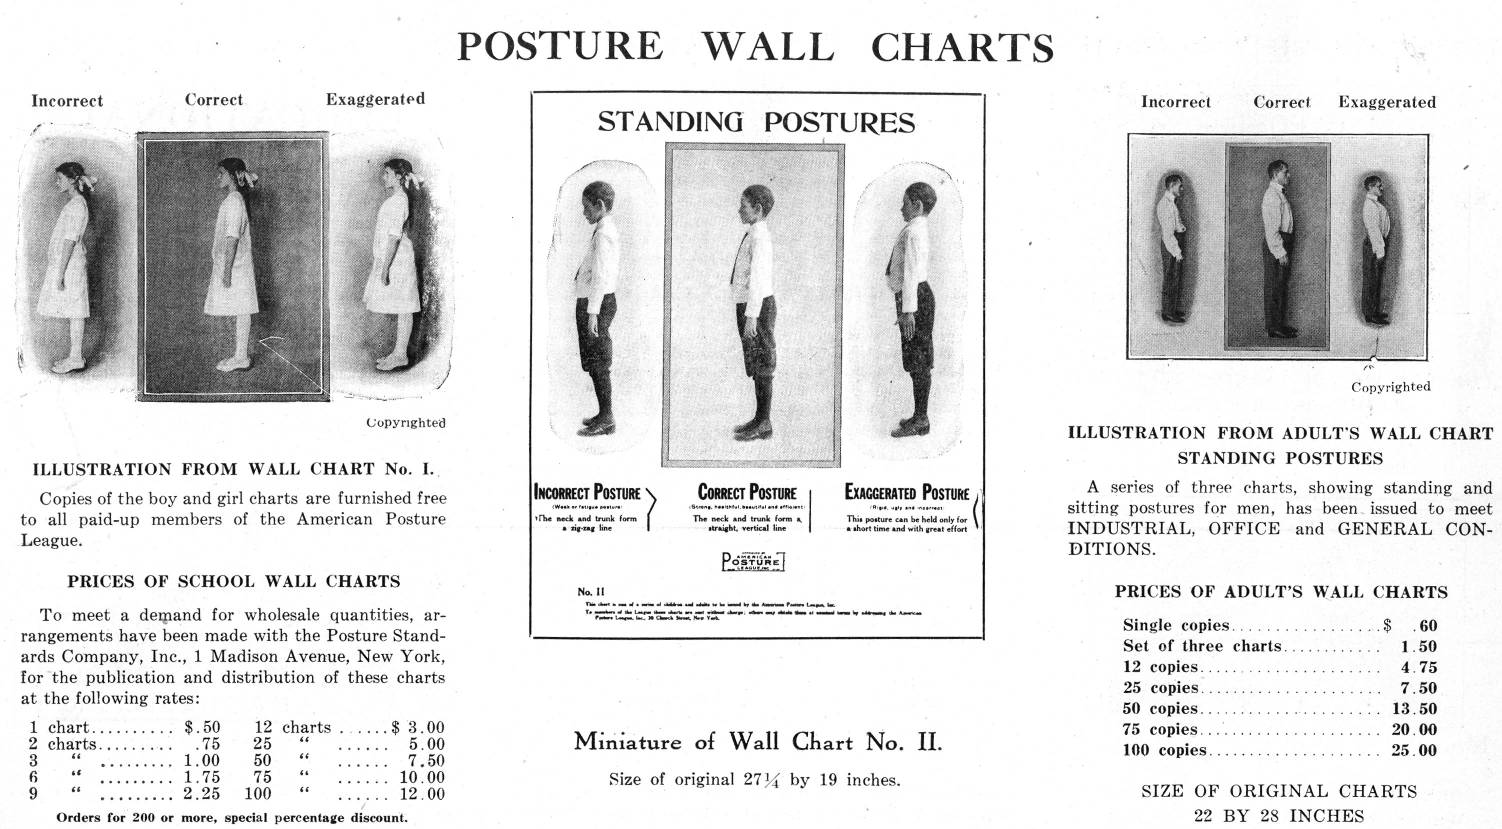 Linker.posture wall charts